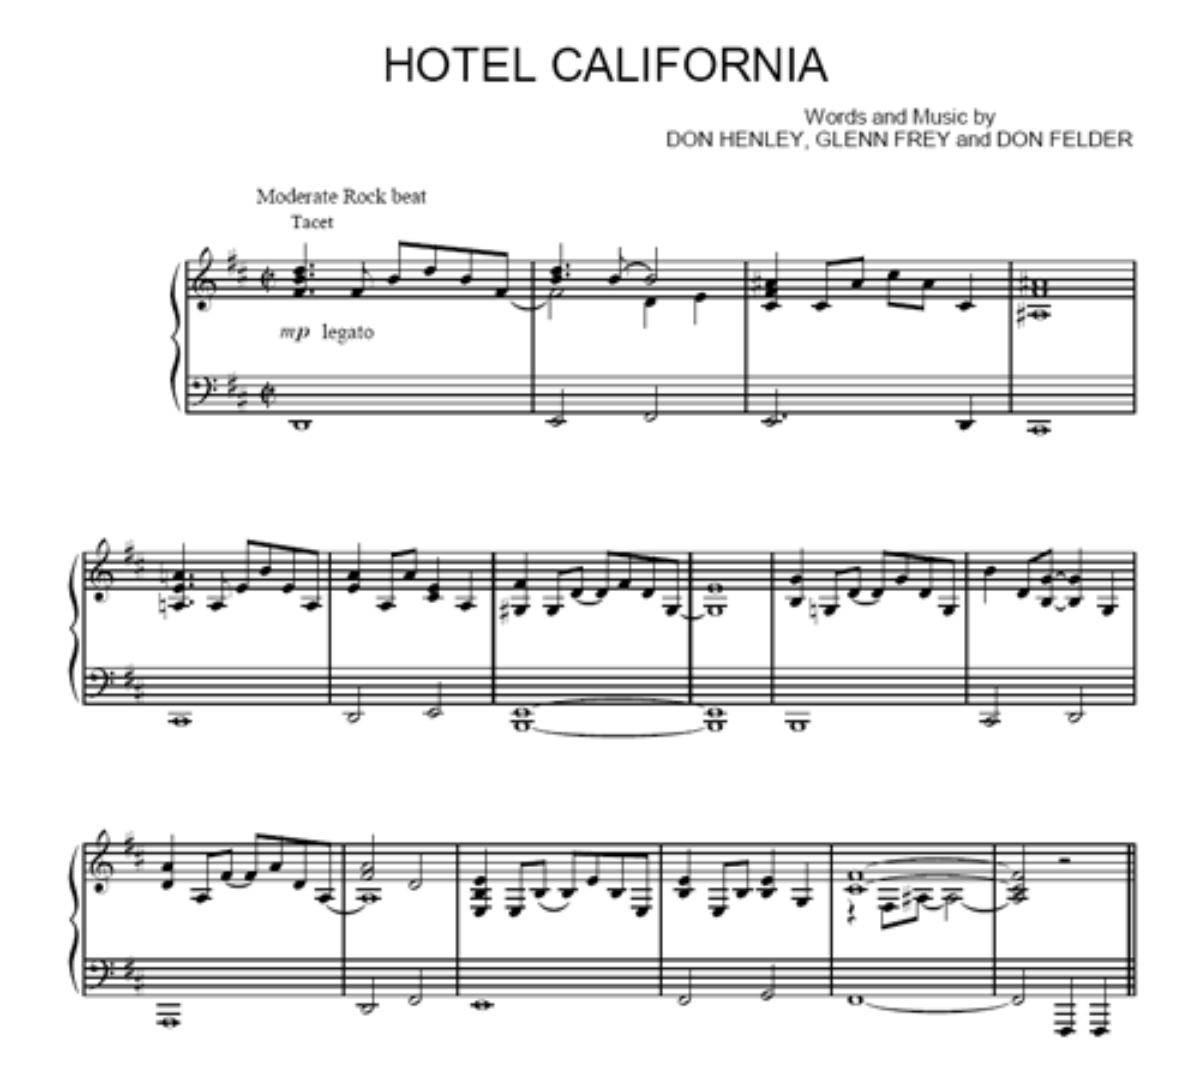 La partition de "Hotel California"